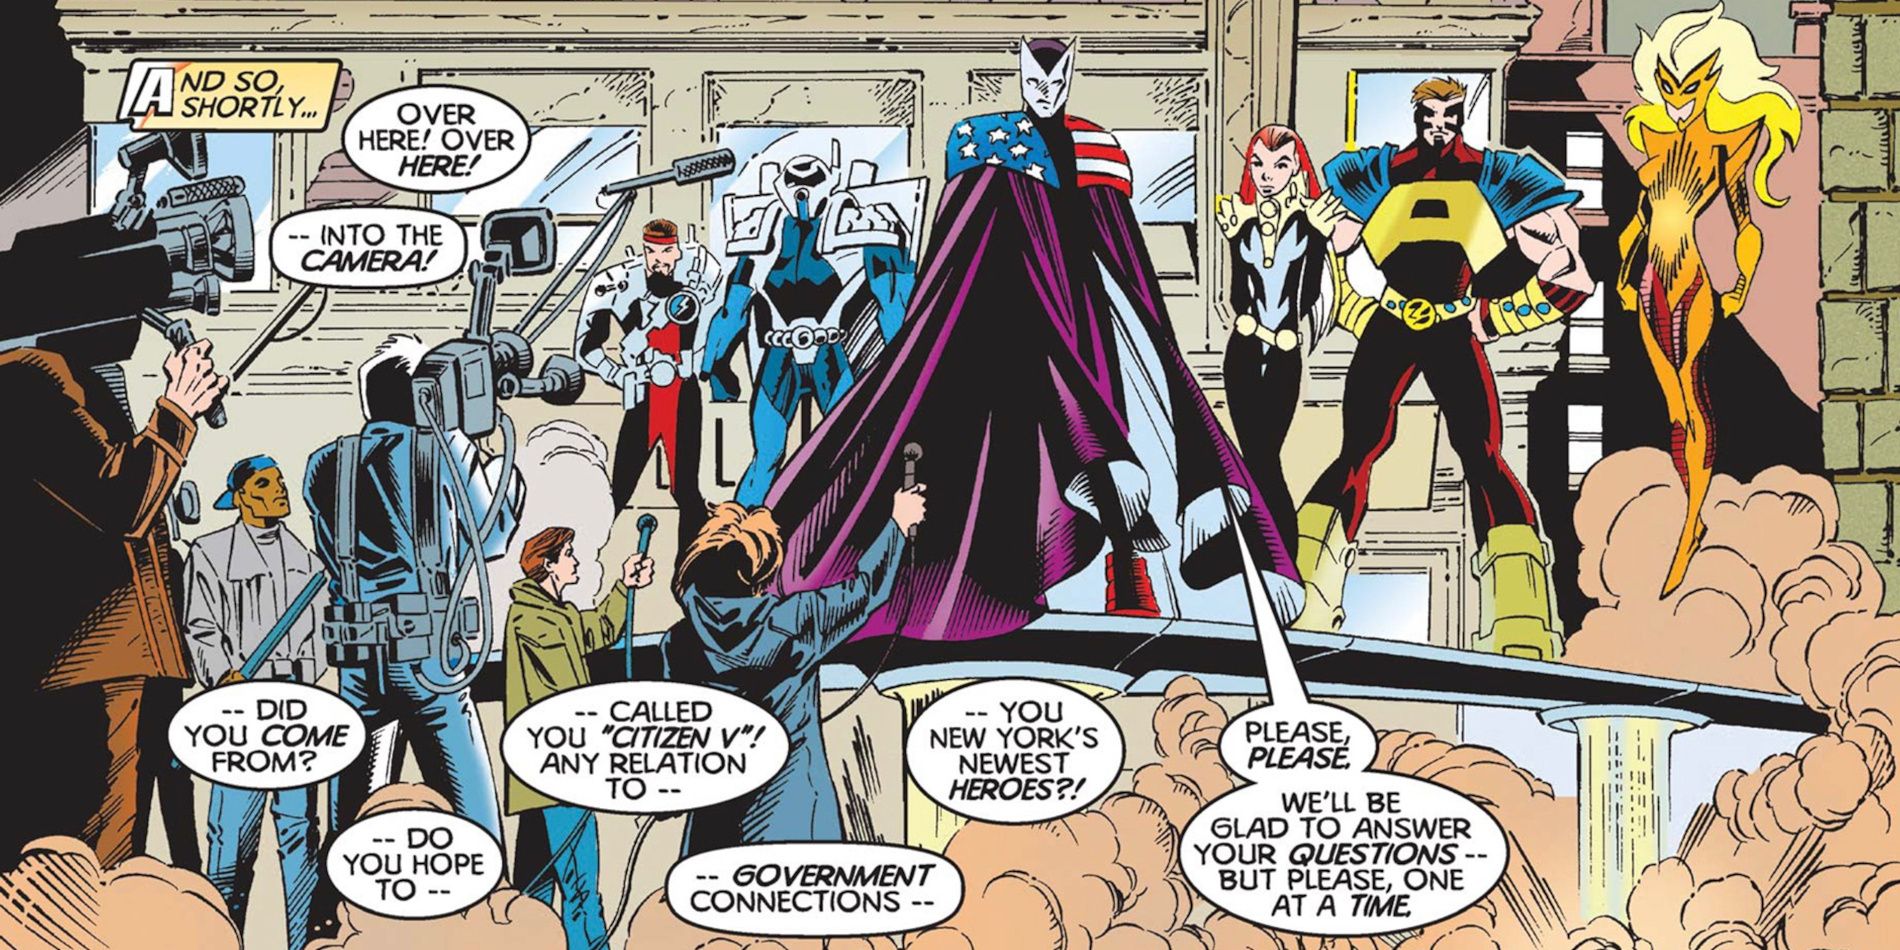 An image of Kurt Busiek's Thunderbolts from Marvel Comics